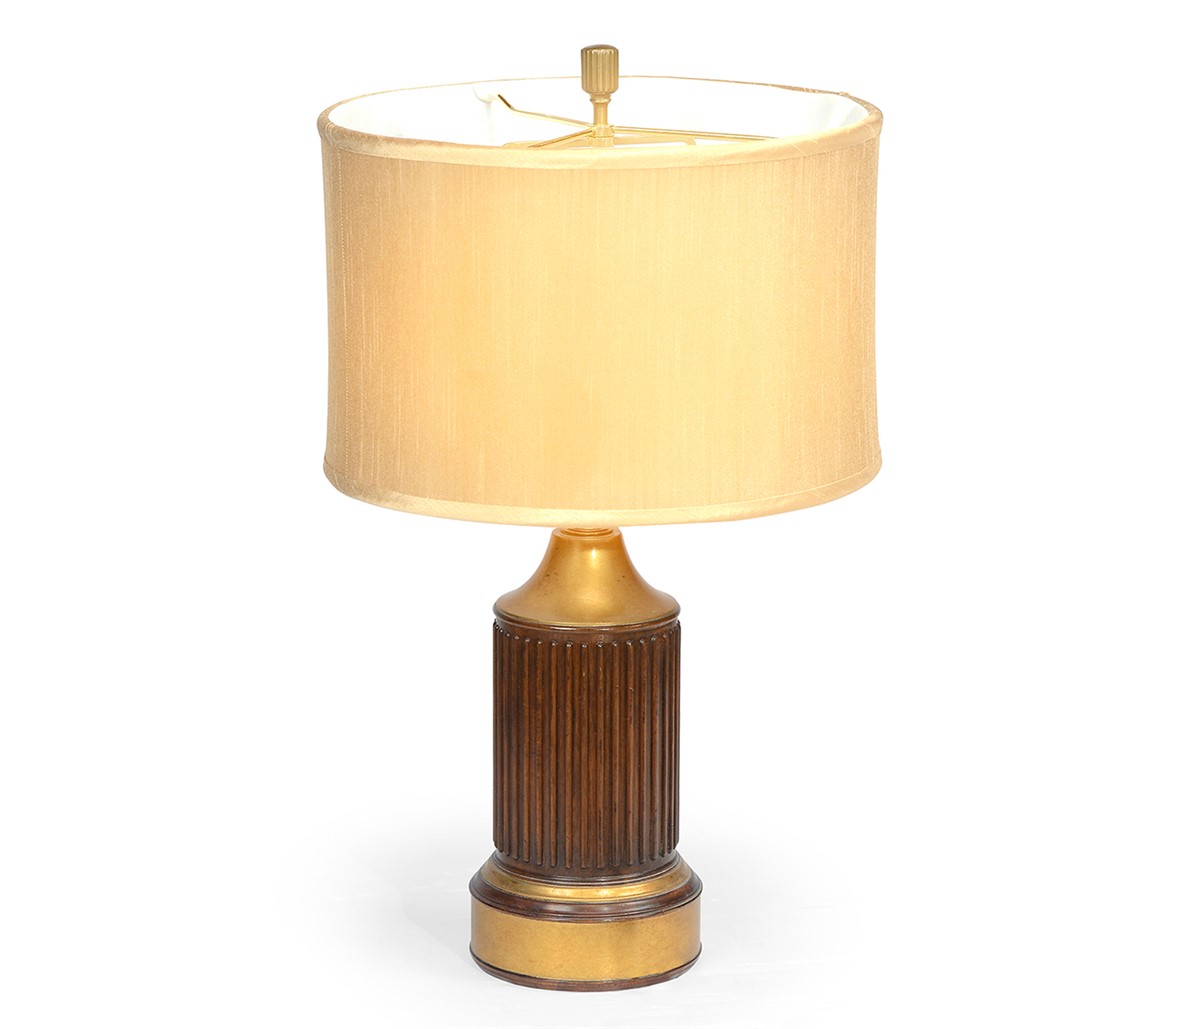 Round fluted mahogany table lamp